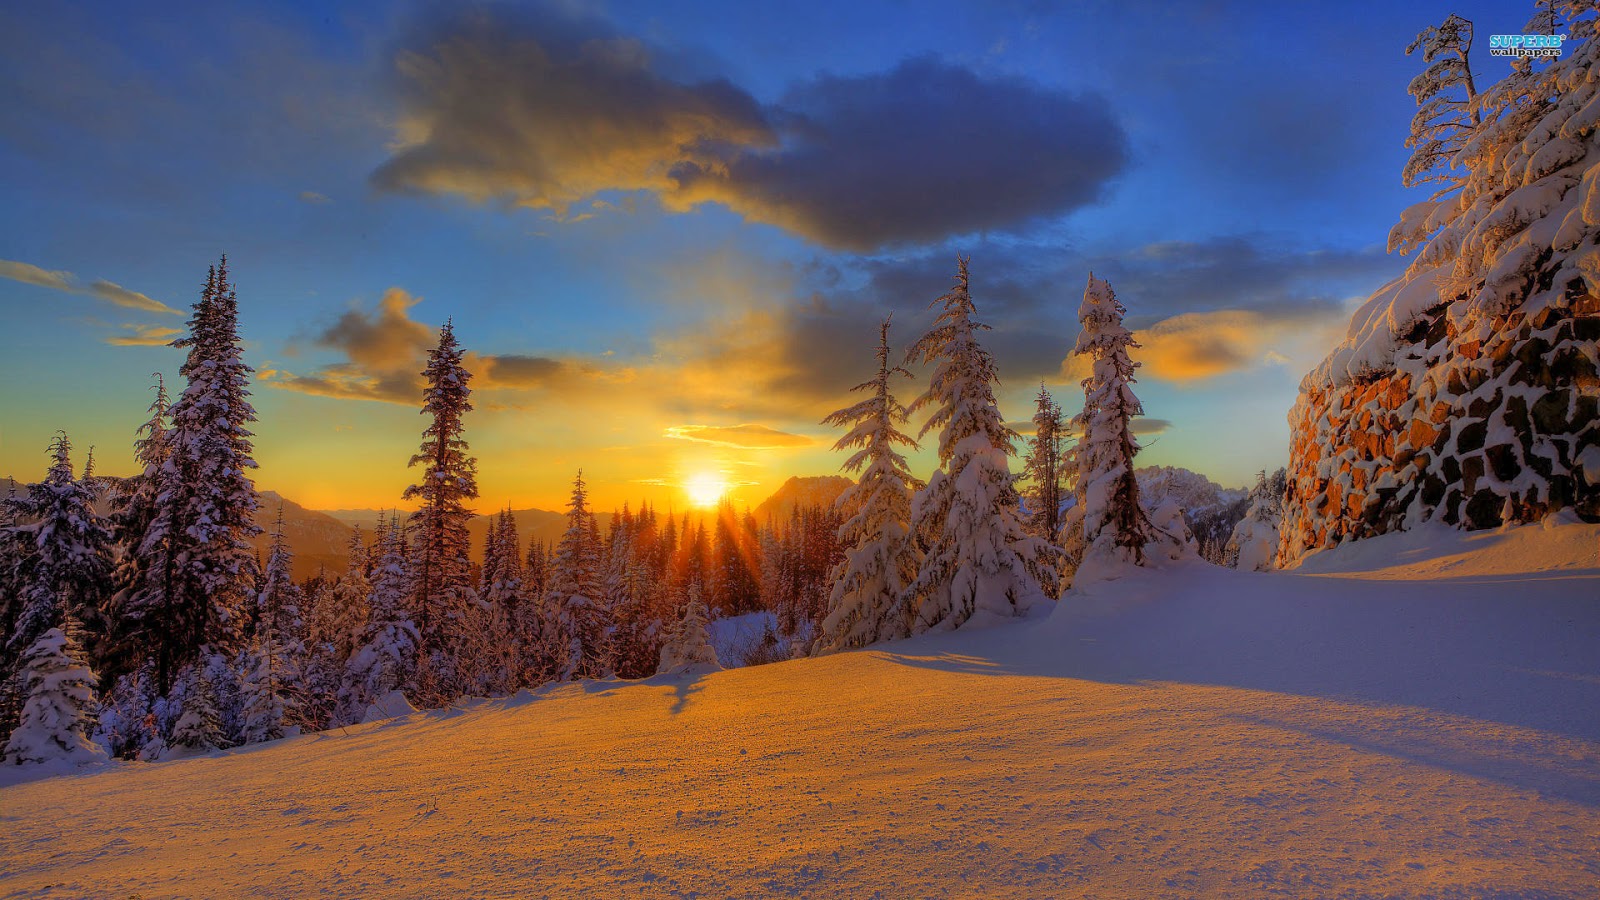 Sunset Snow Mountain Beautiful Nature Image And Wallpaper